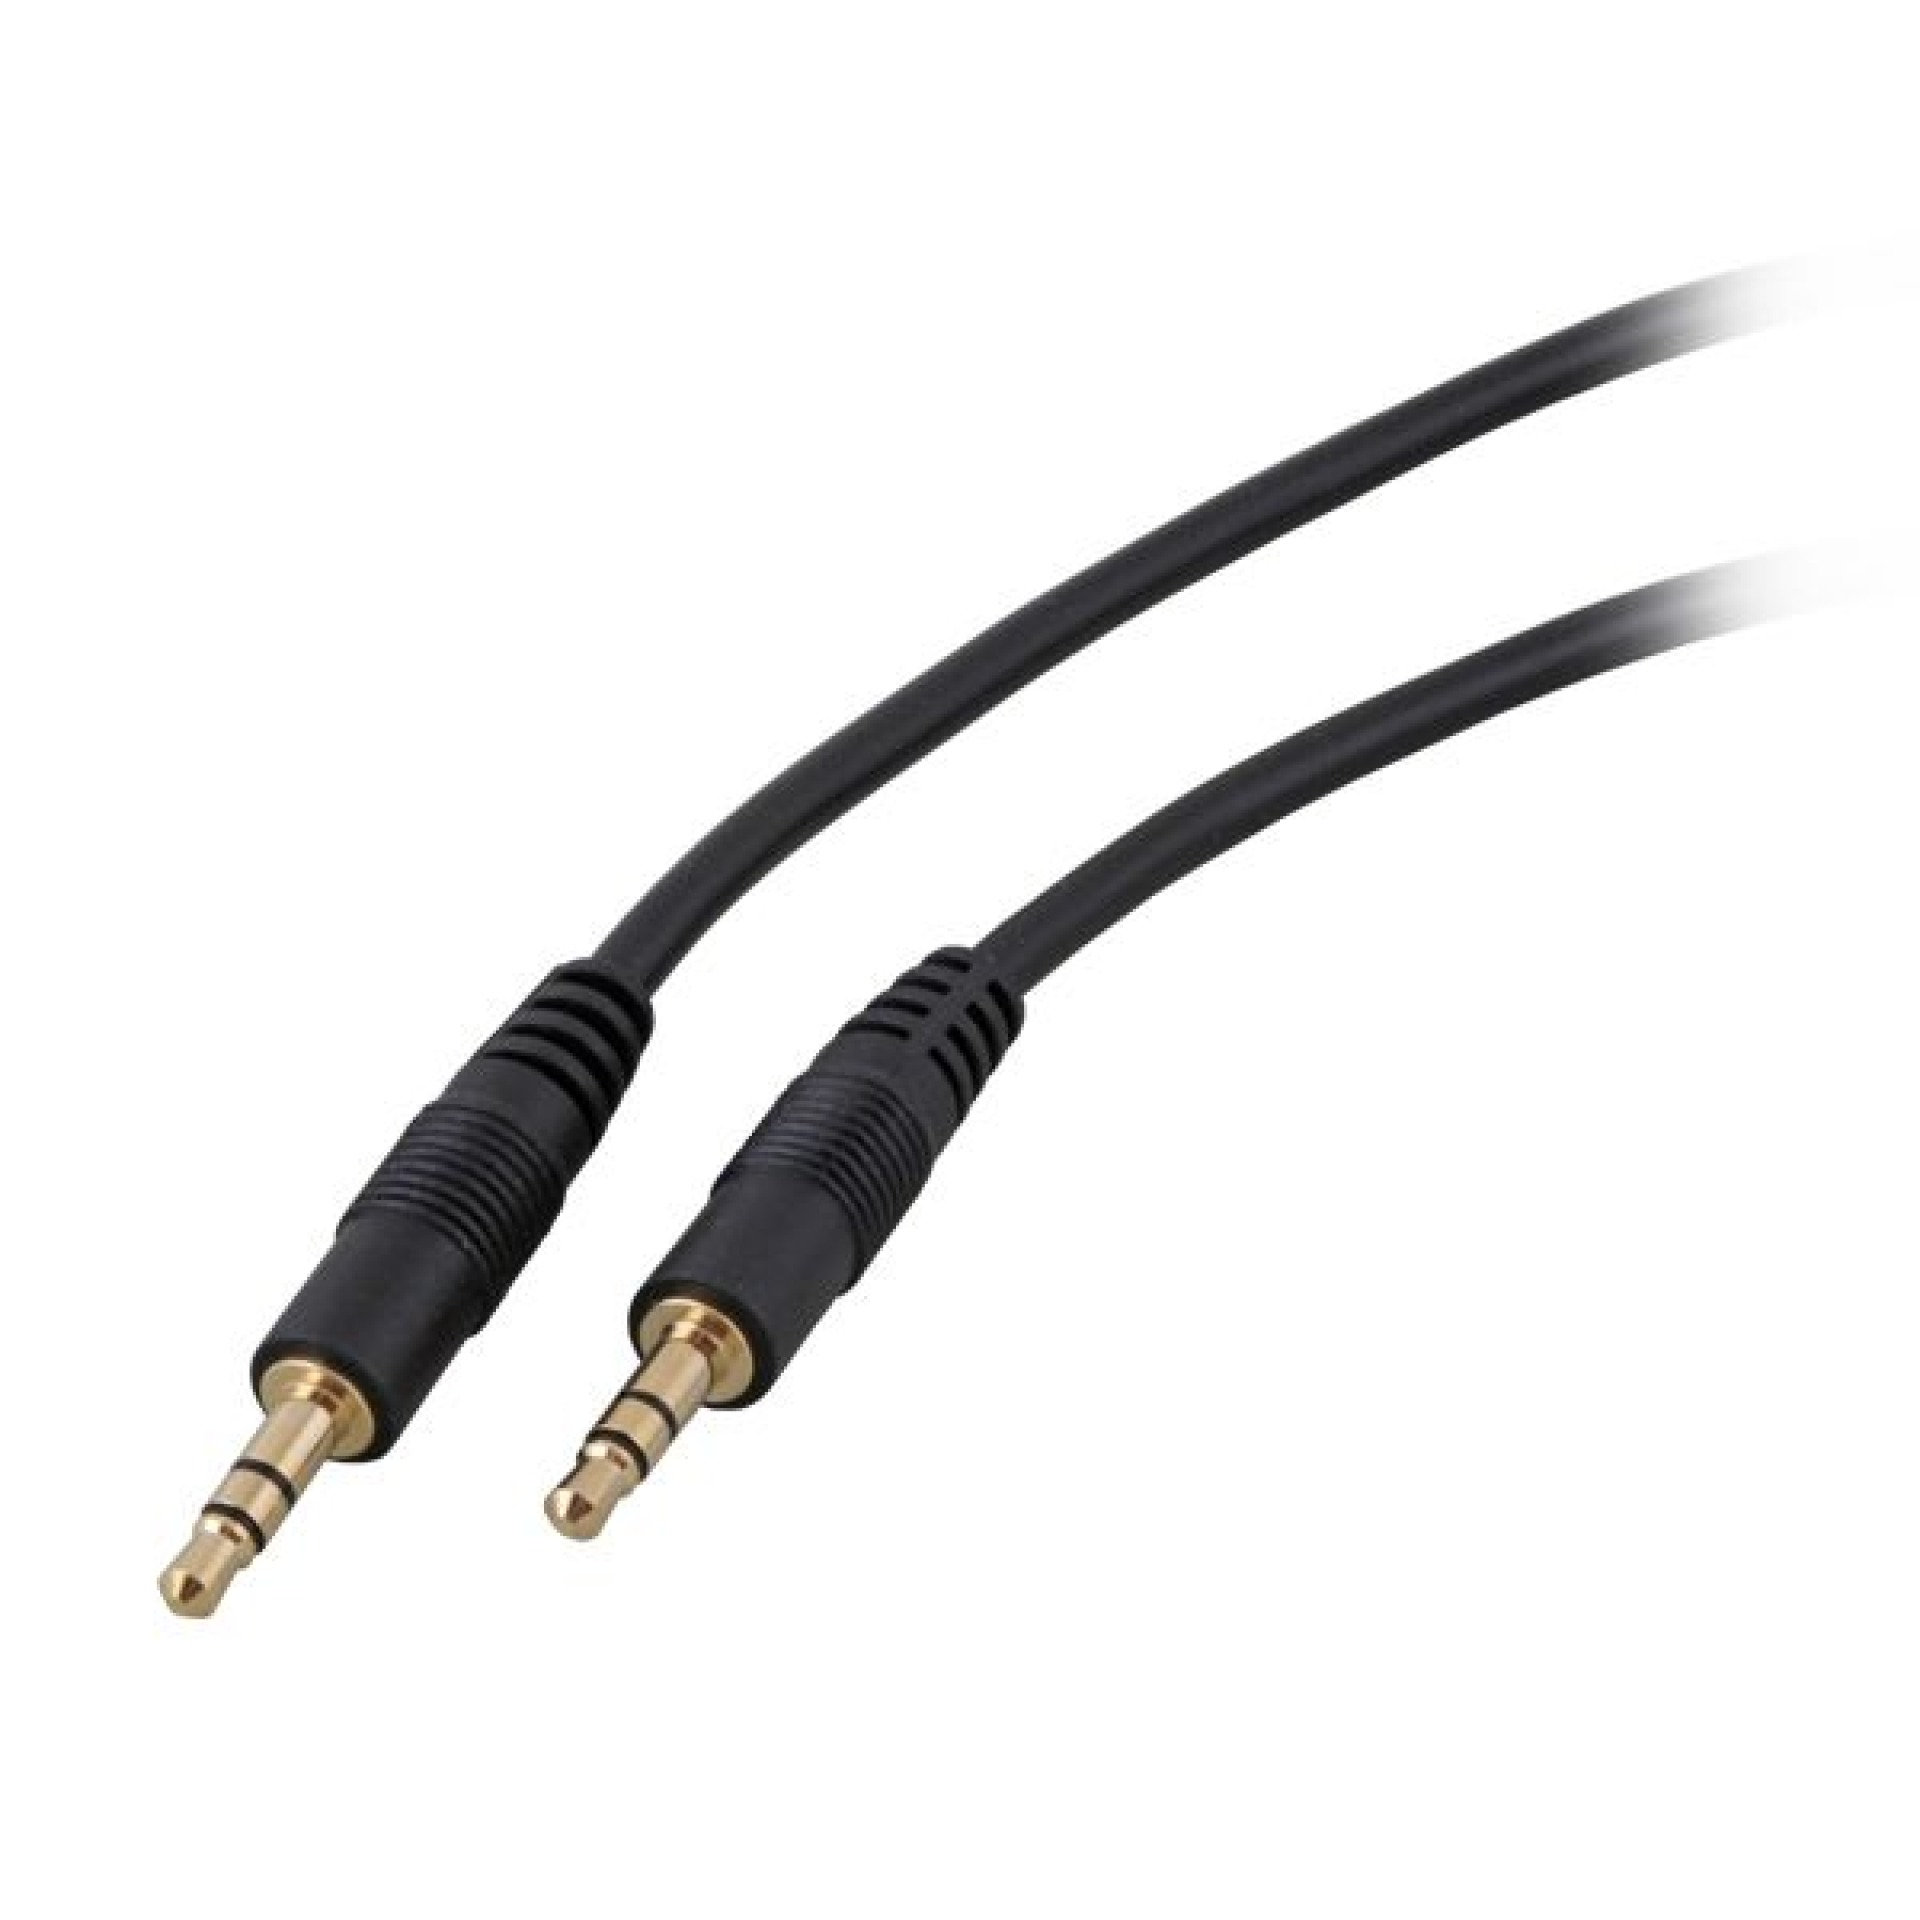 Audio Connection Cabel, Klinke 3.5mm Stereo, 15 meters, black